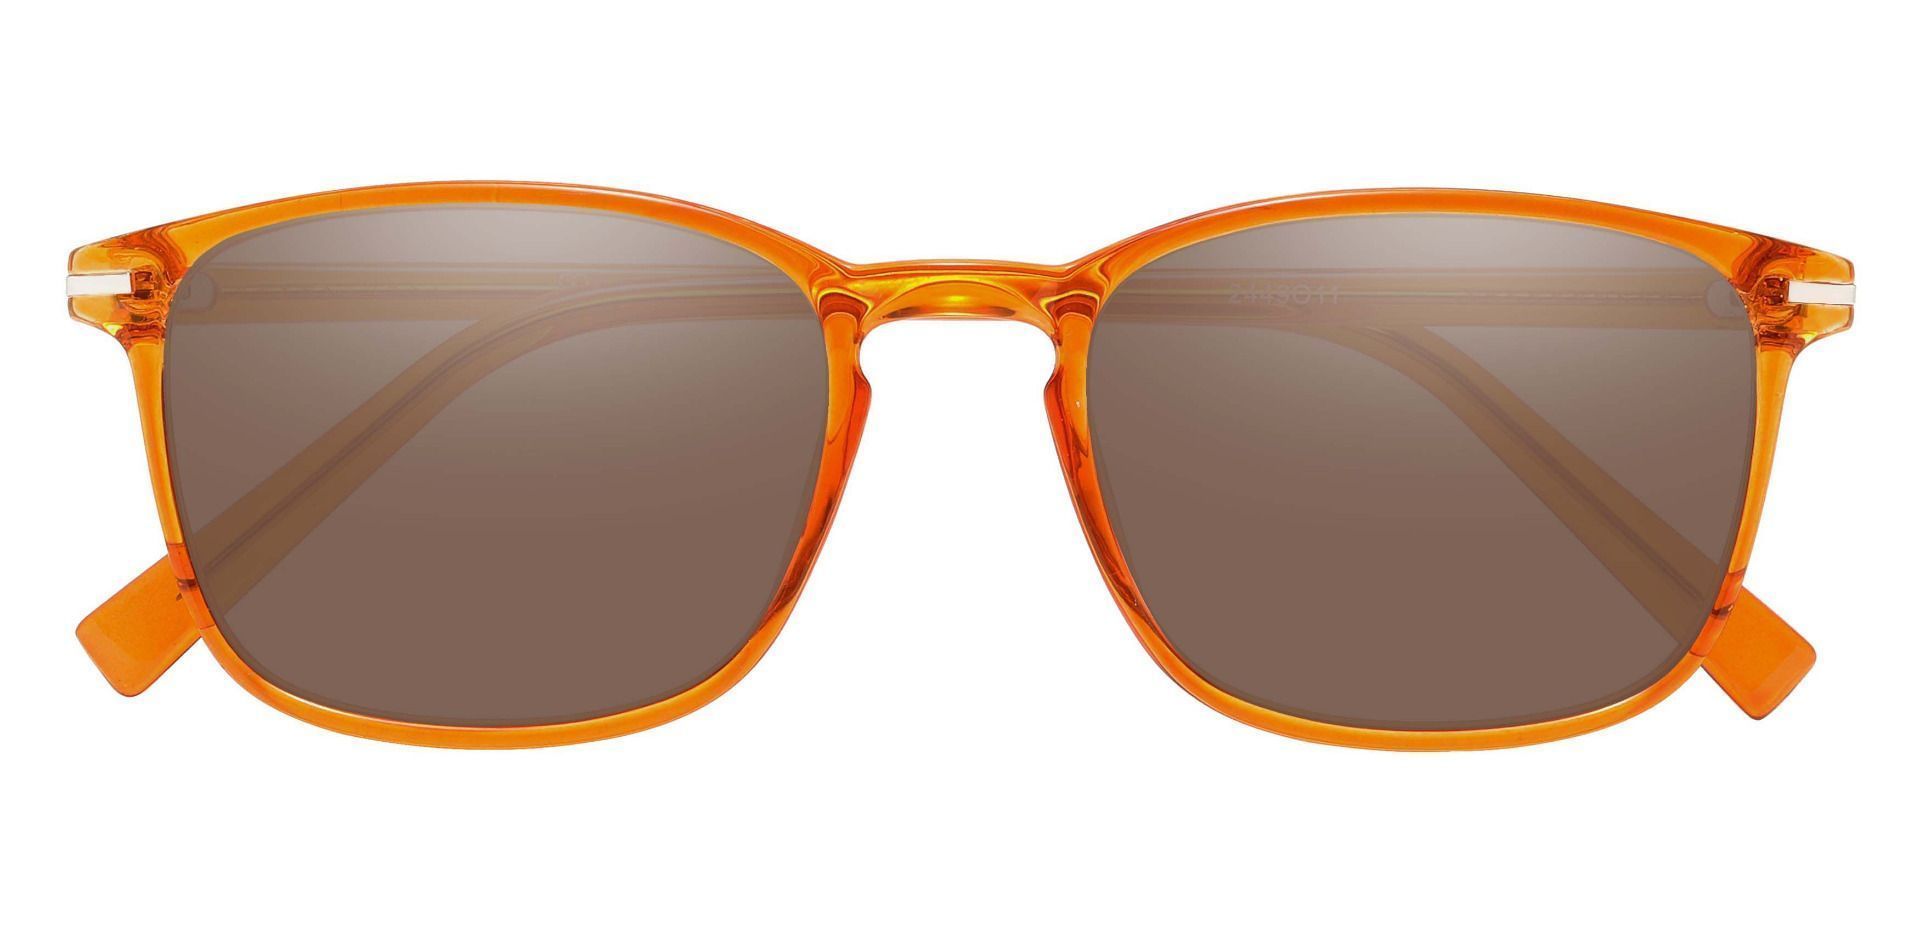 Waterig Reductor Cordelia Dumont Rectangle Progressive Sunglasses - Orange Frame With Brown Lenses |  Women's Sunglasses | Payne Glasses